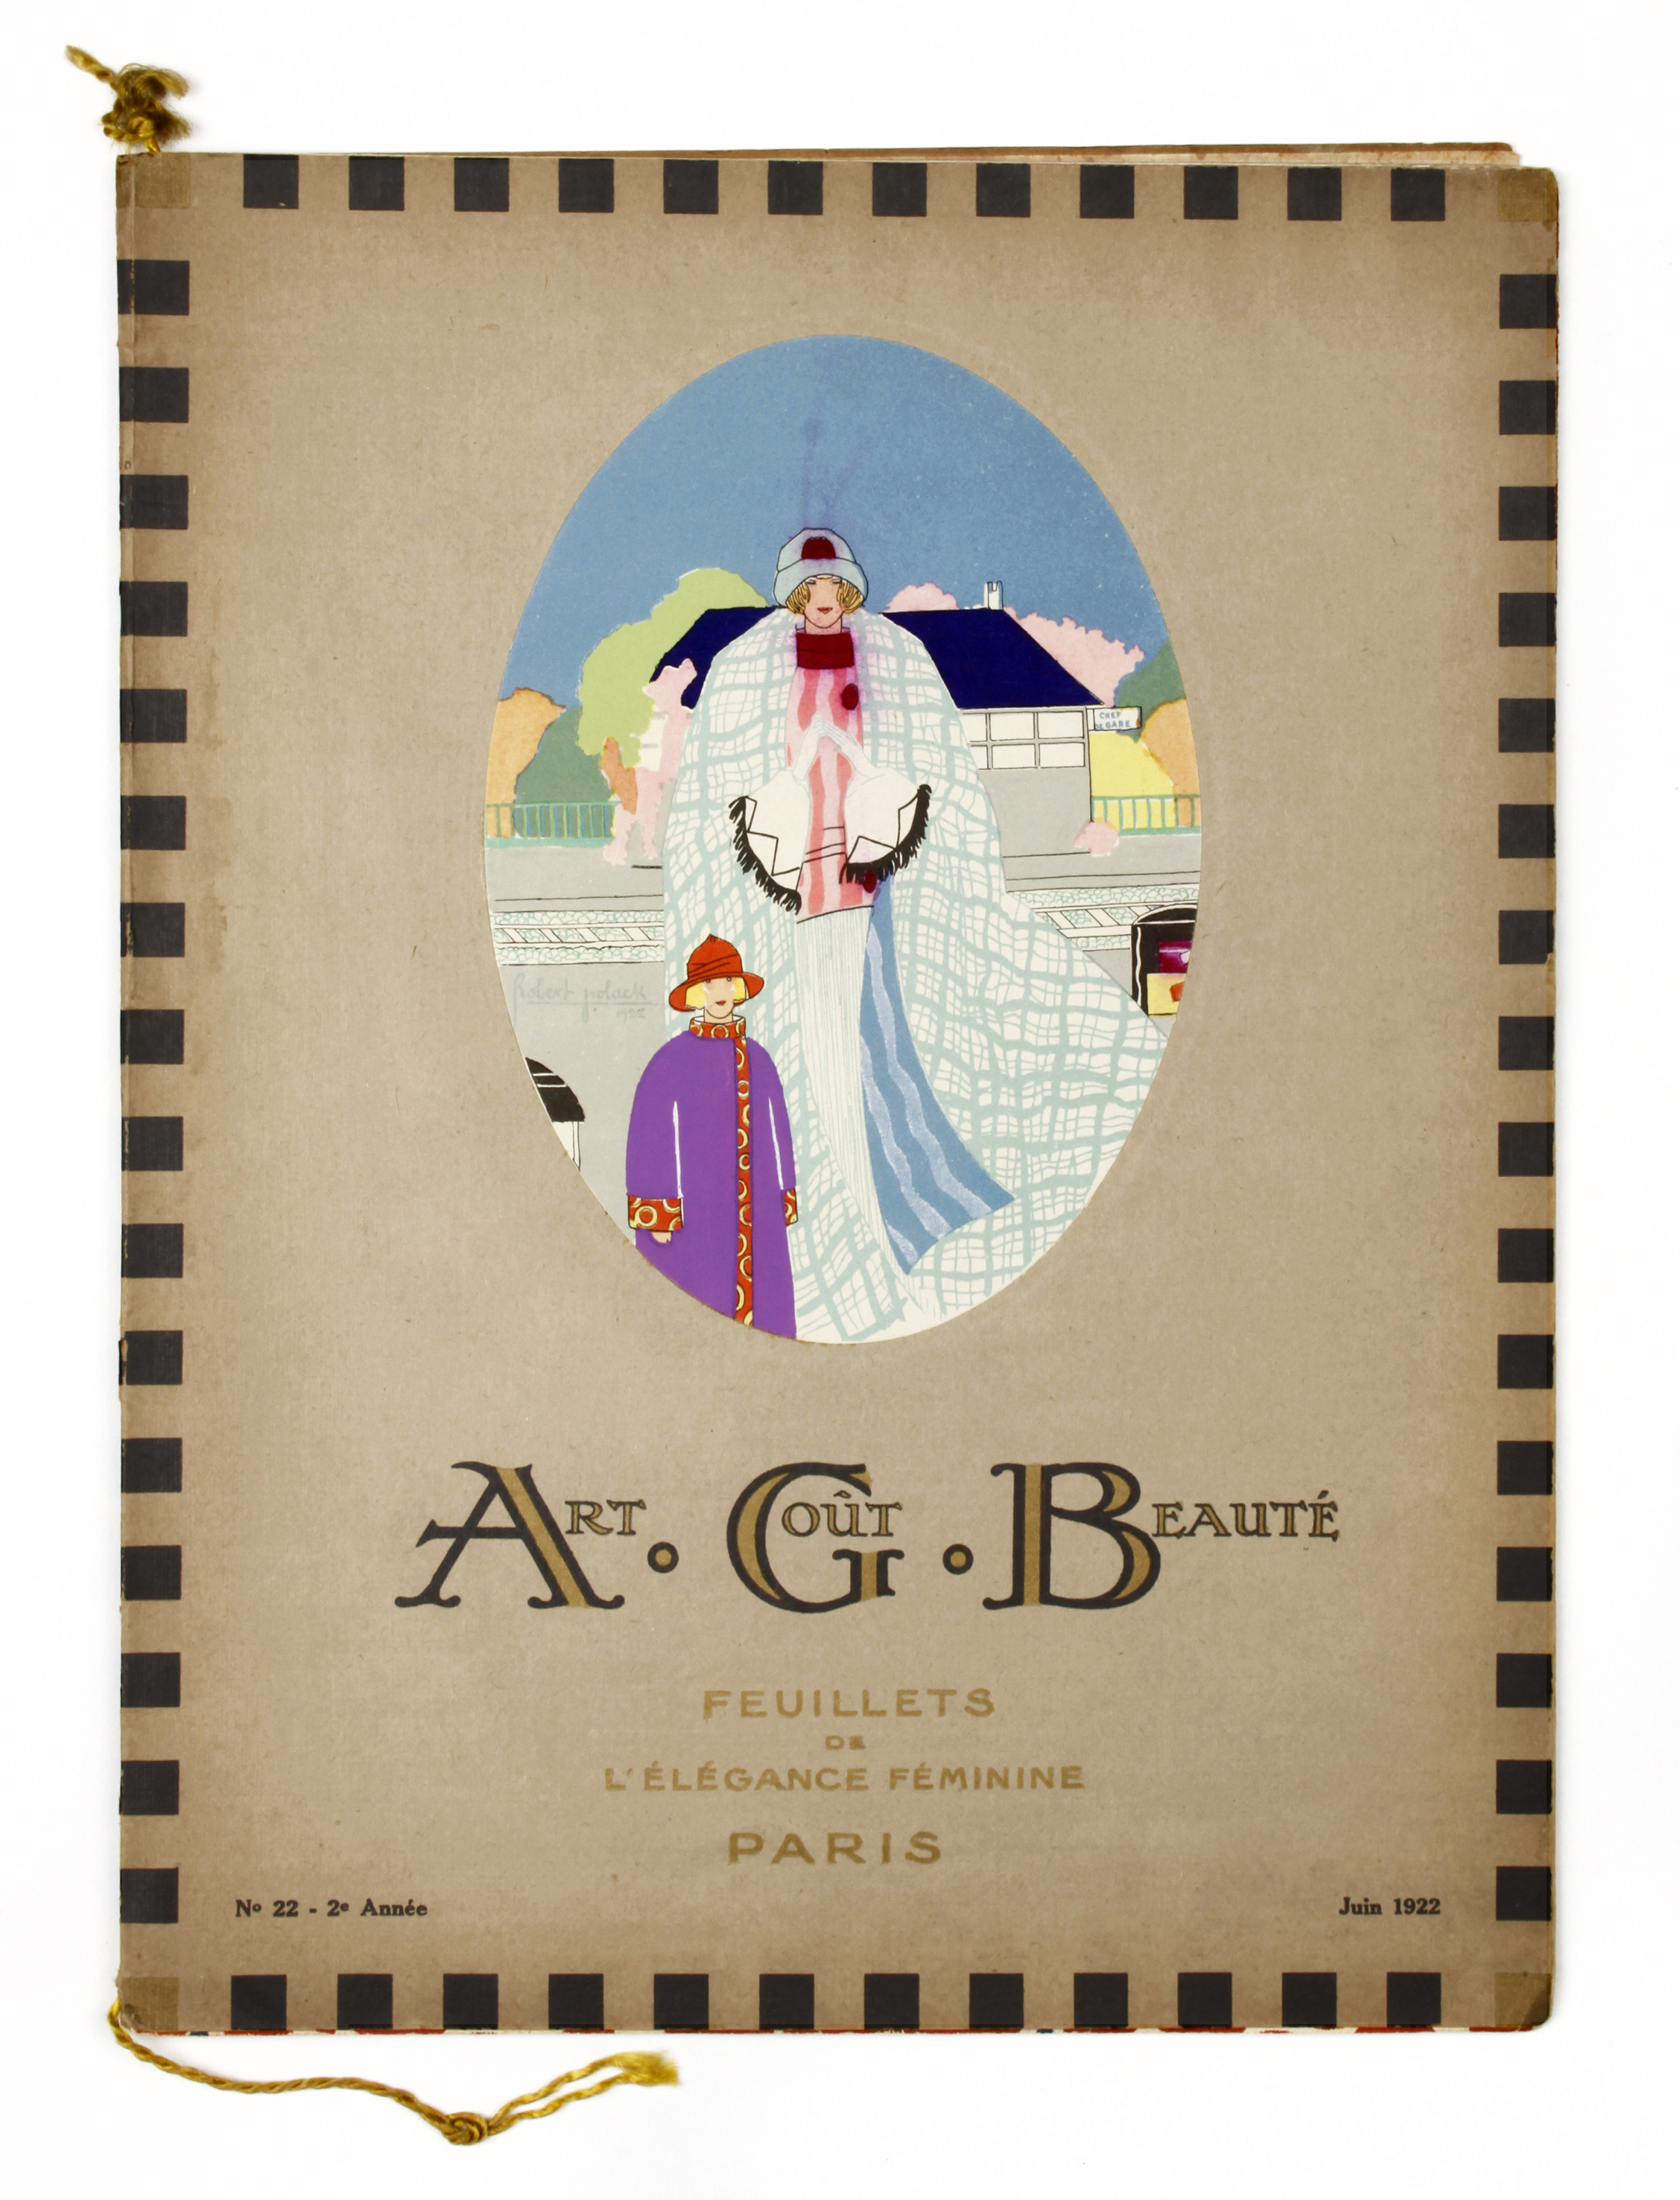 1922 06 - Art Goût Beauté: Feuillets de L’Elegance Feminine [Art - Good Taste & Beauty – Pages of Feminine Elegance] - Vintage Book from 1922